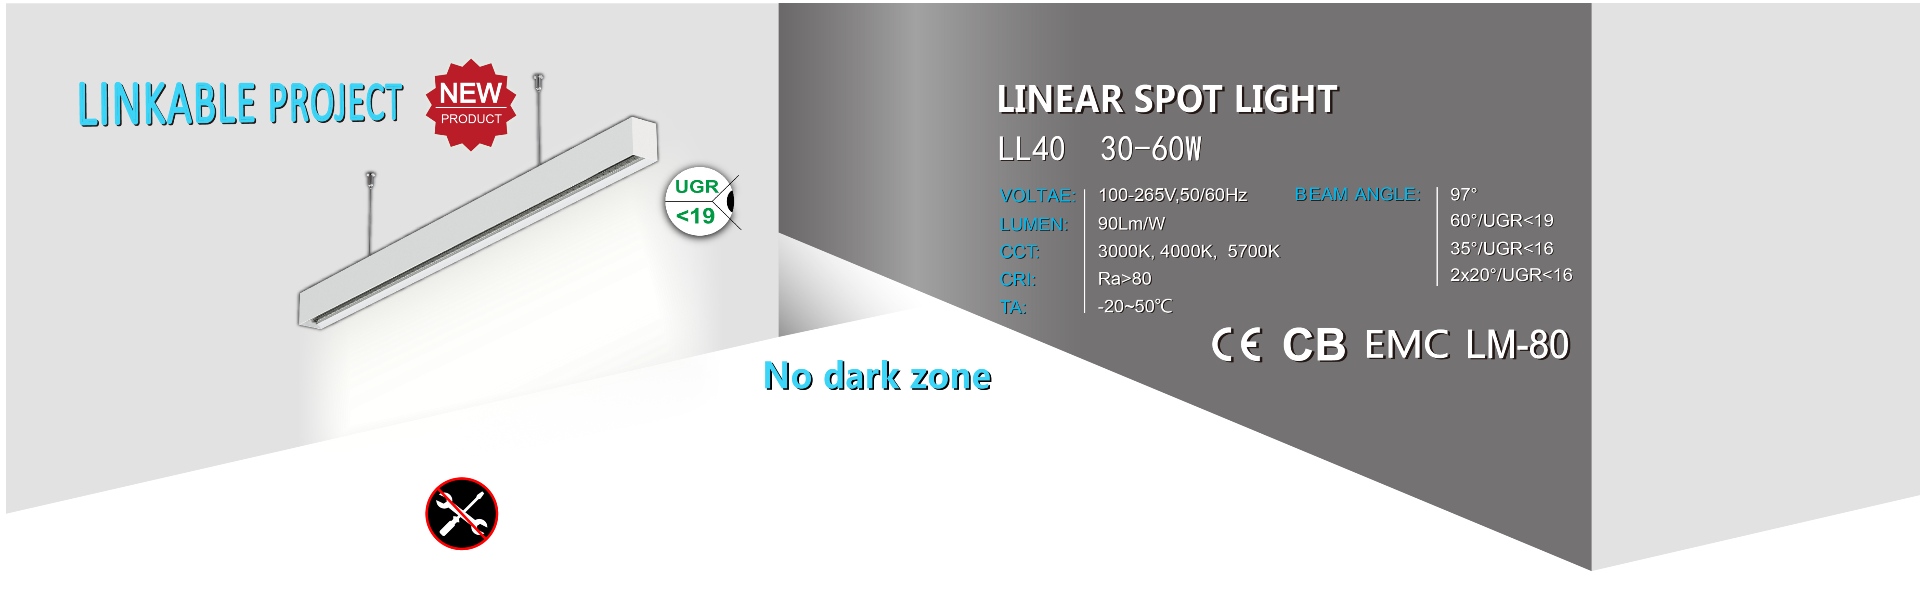 led lineair licht, led panel light, led projectverlichting,Zhongshan Xiongqi Lighting Co.,Ltd